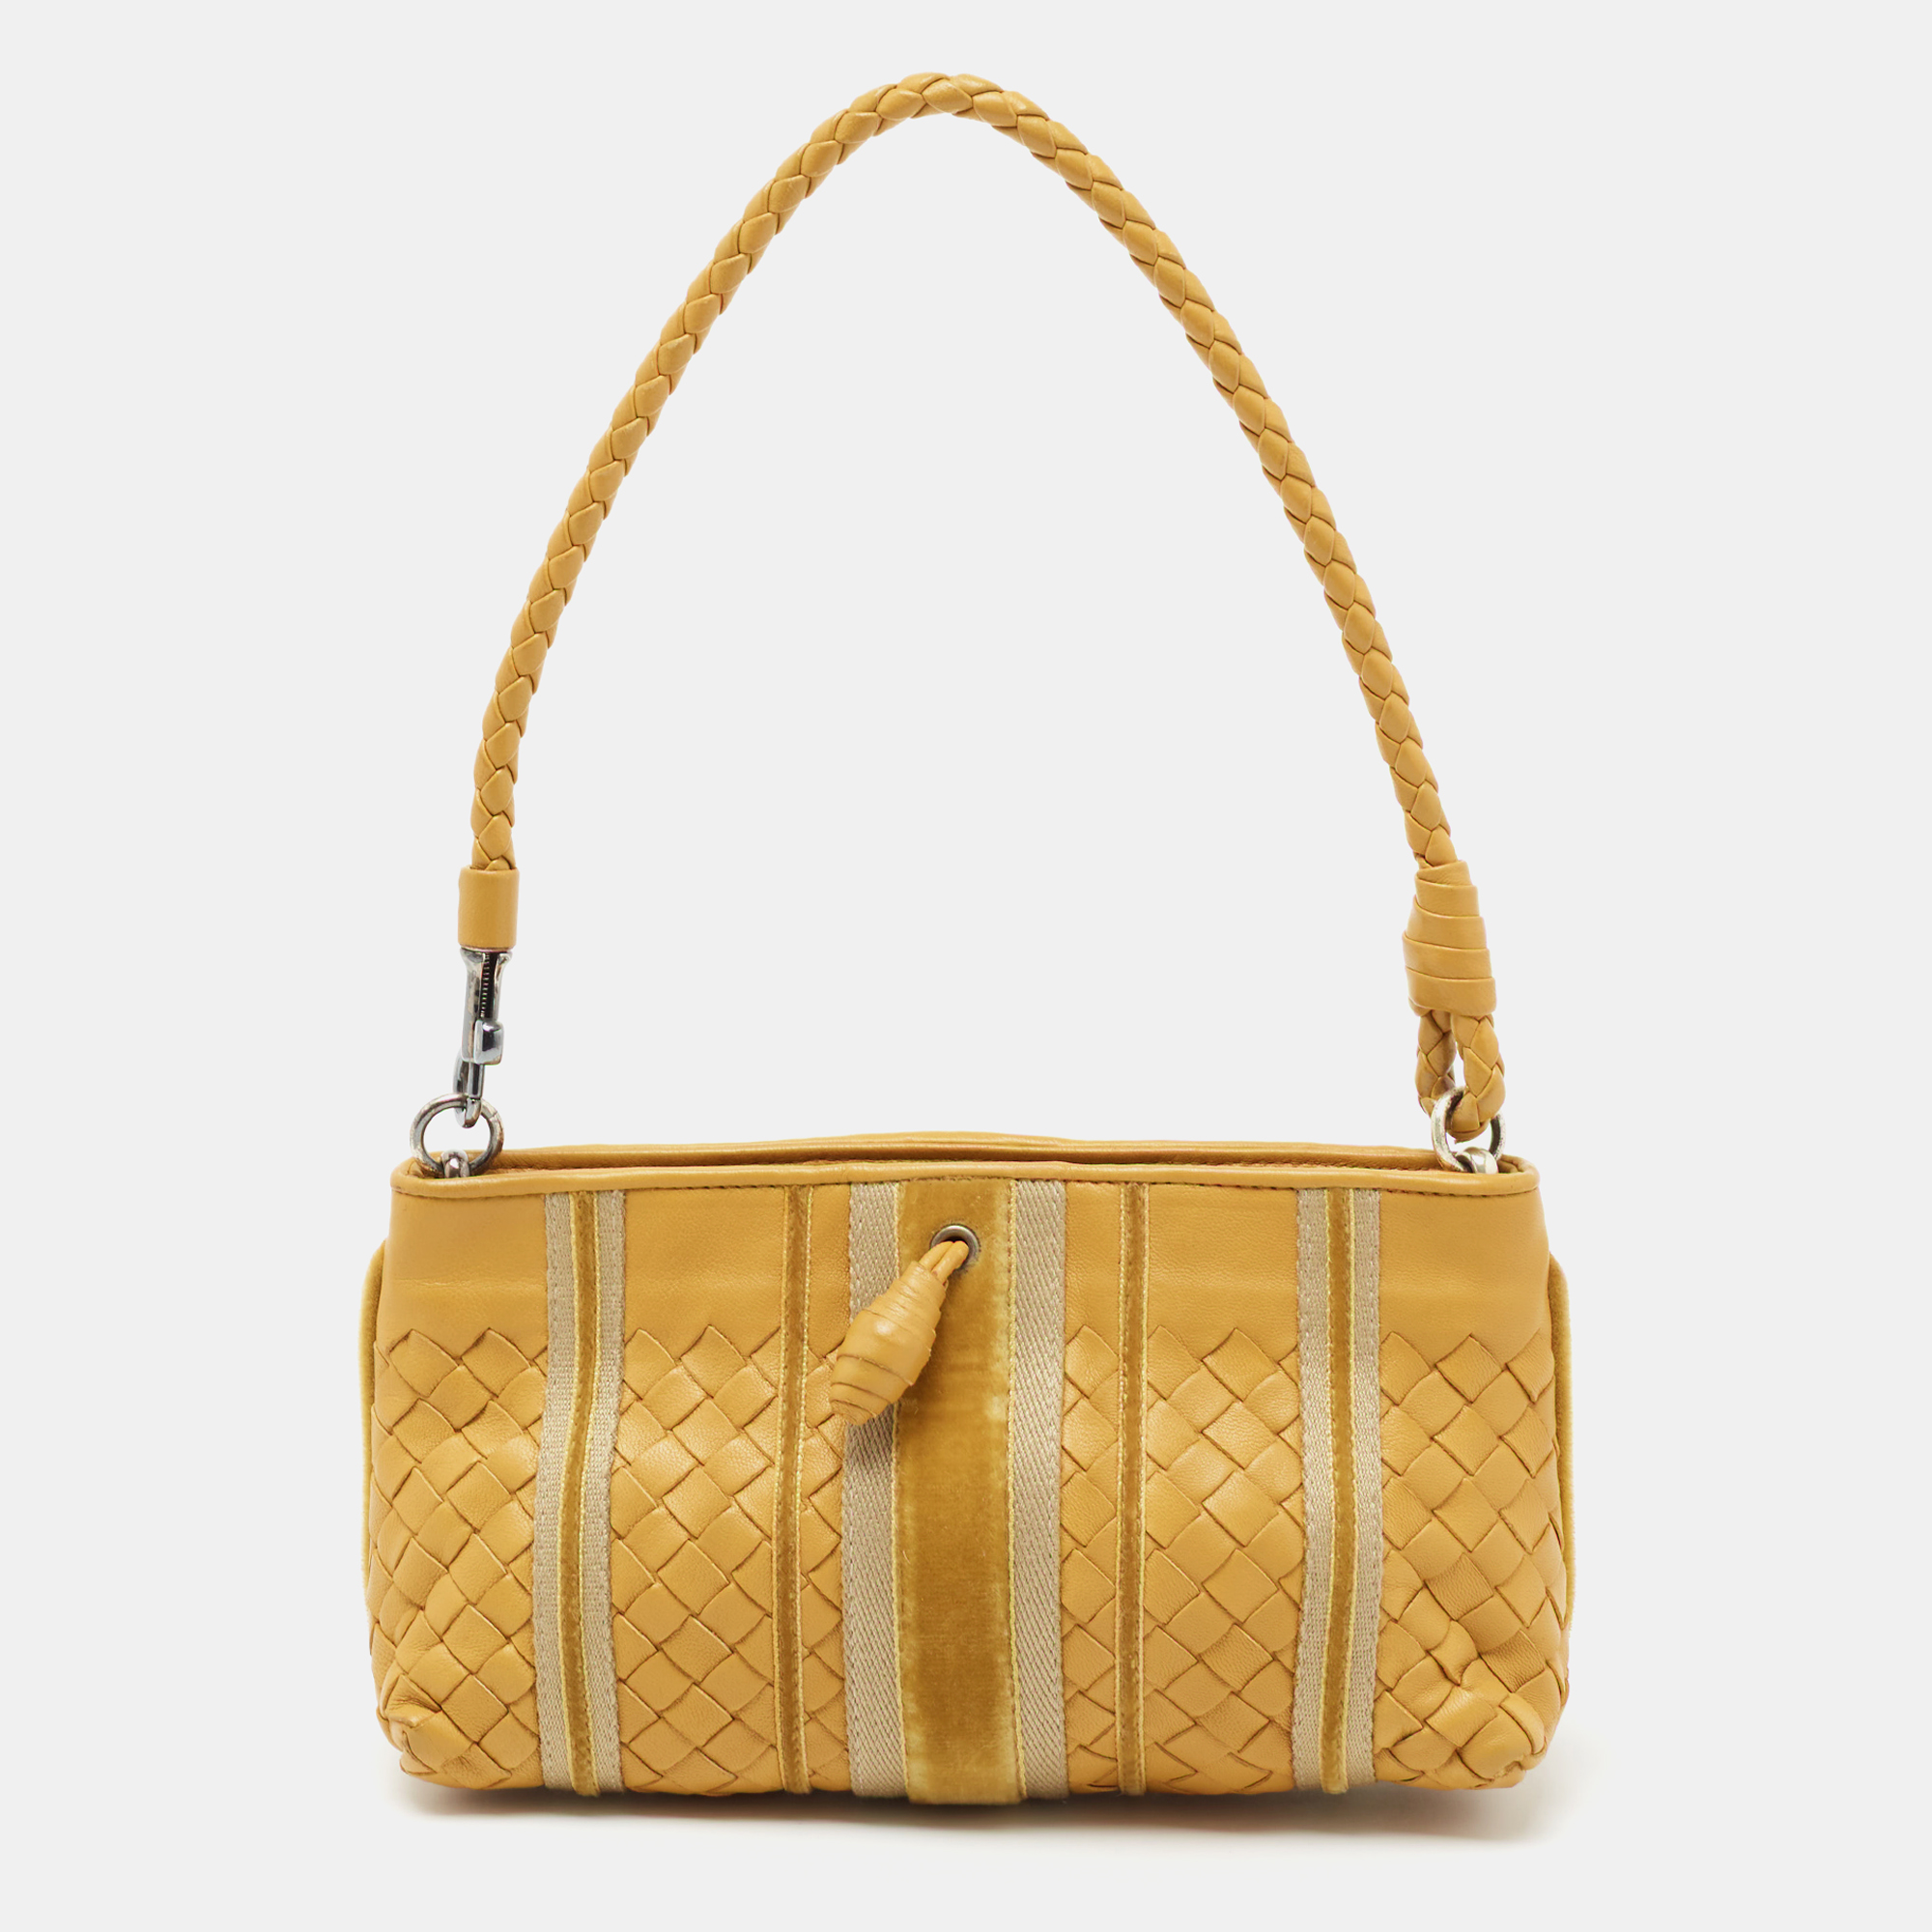 Bottega Veneta Yellow Intrecciato Leather Shoulder Bag